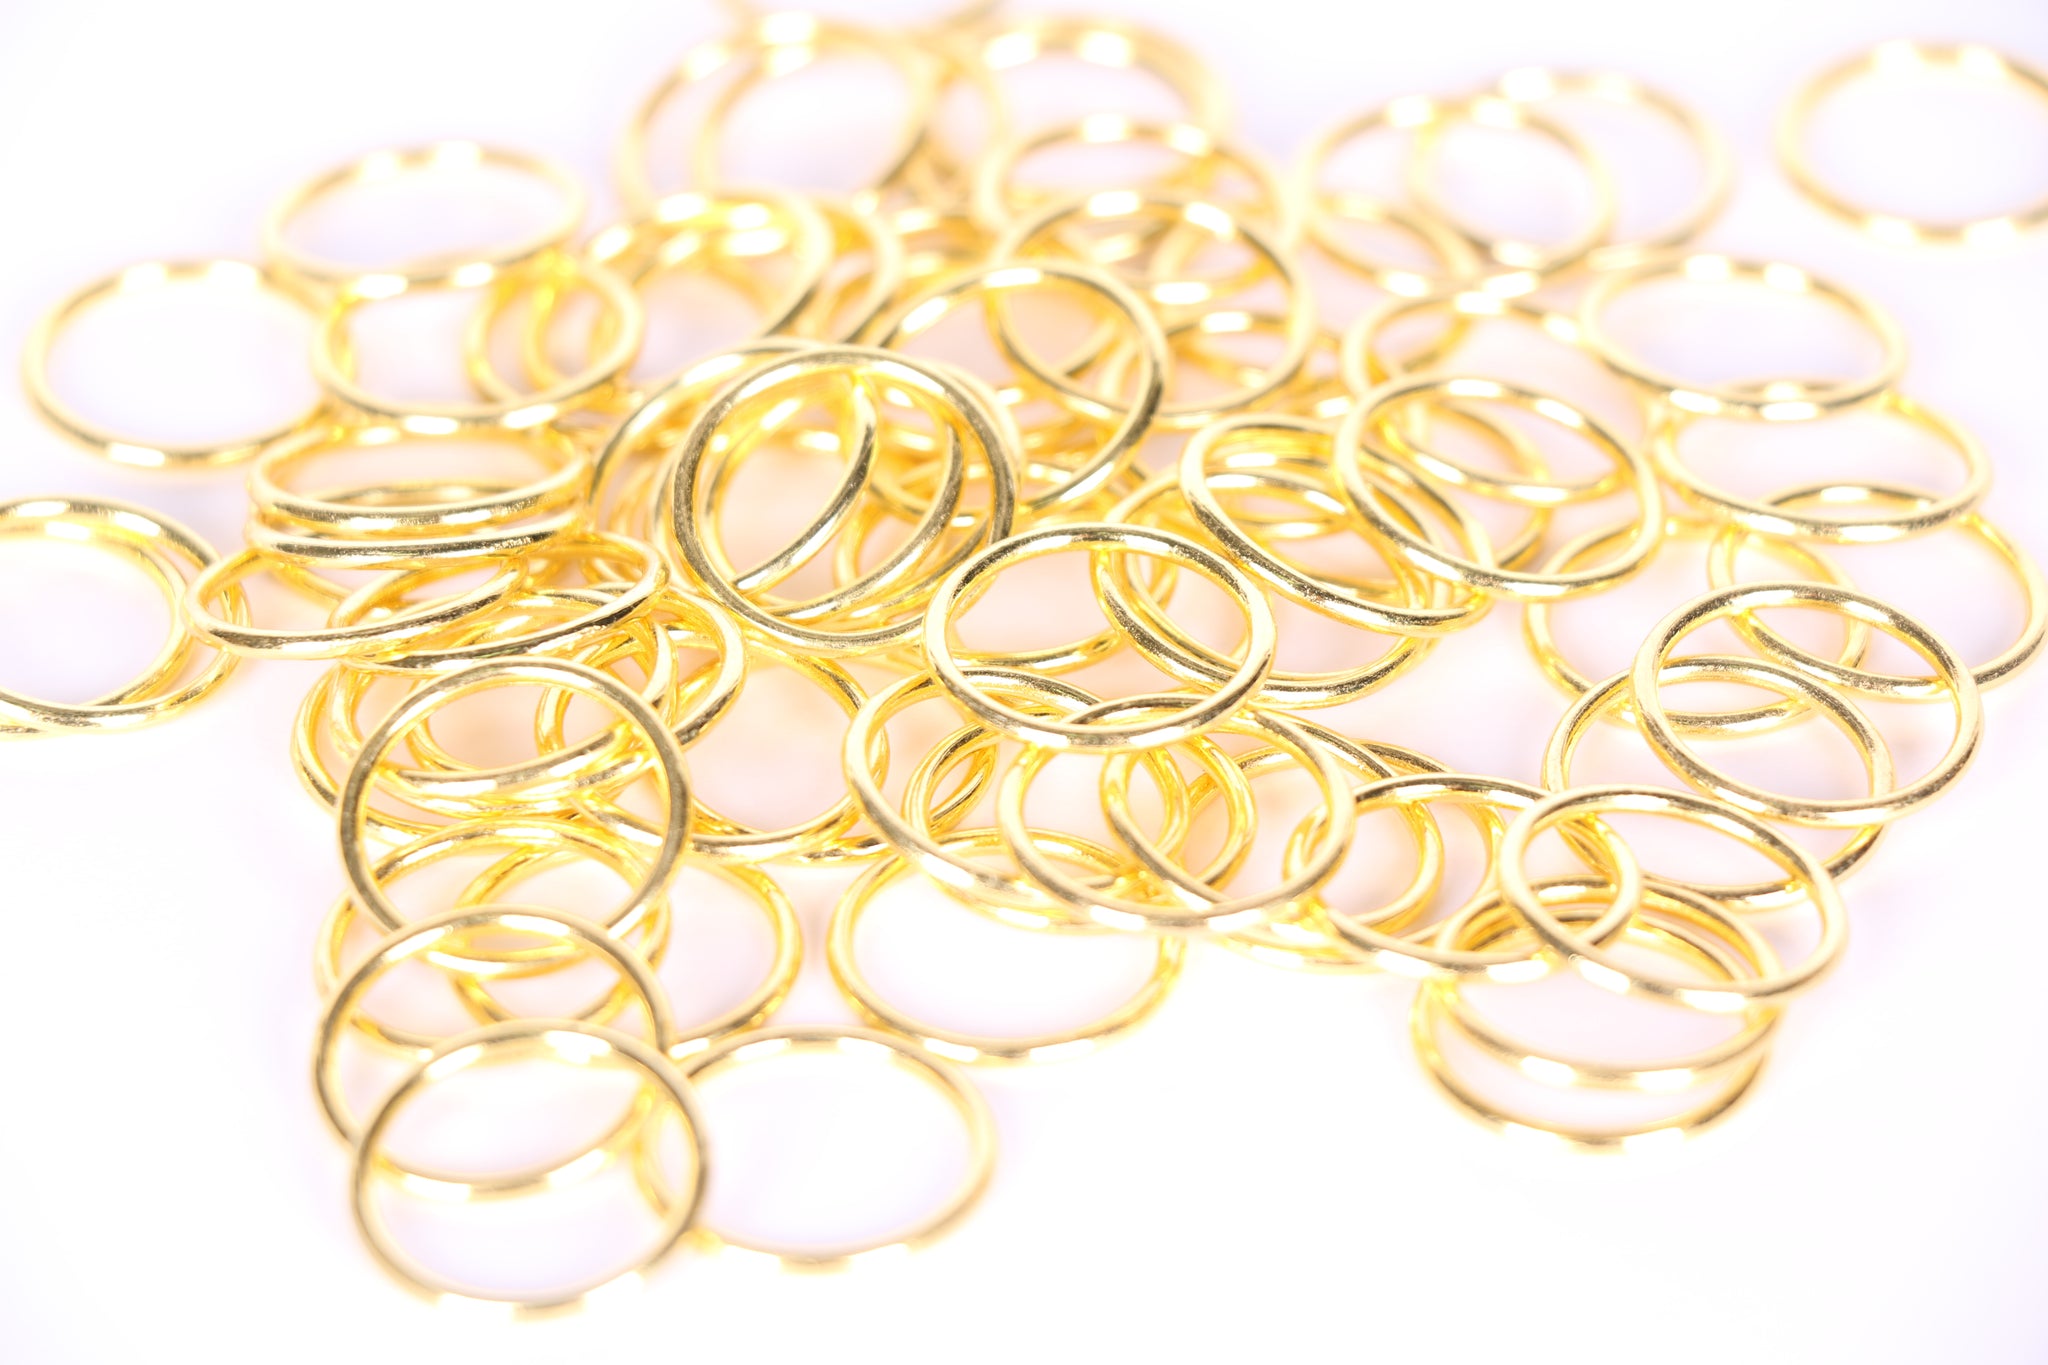 Gold Metal Rings for Bra Making Lingerie Swimwear Active Wear